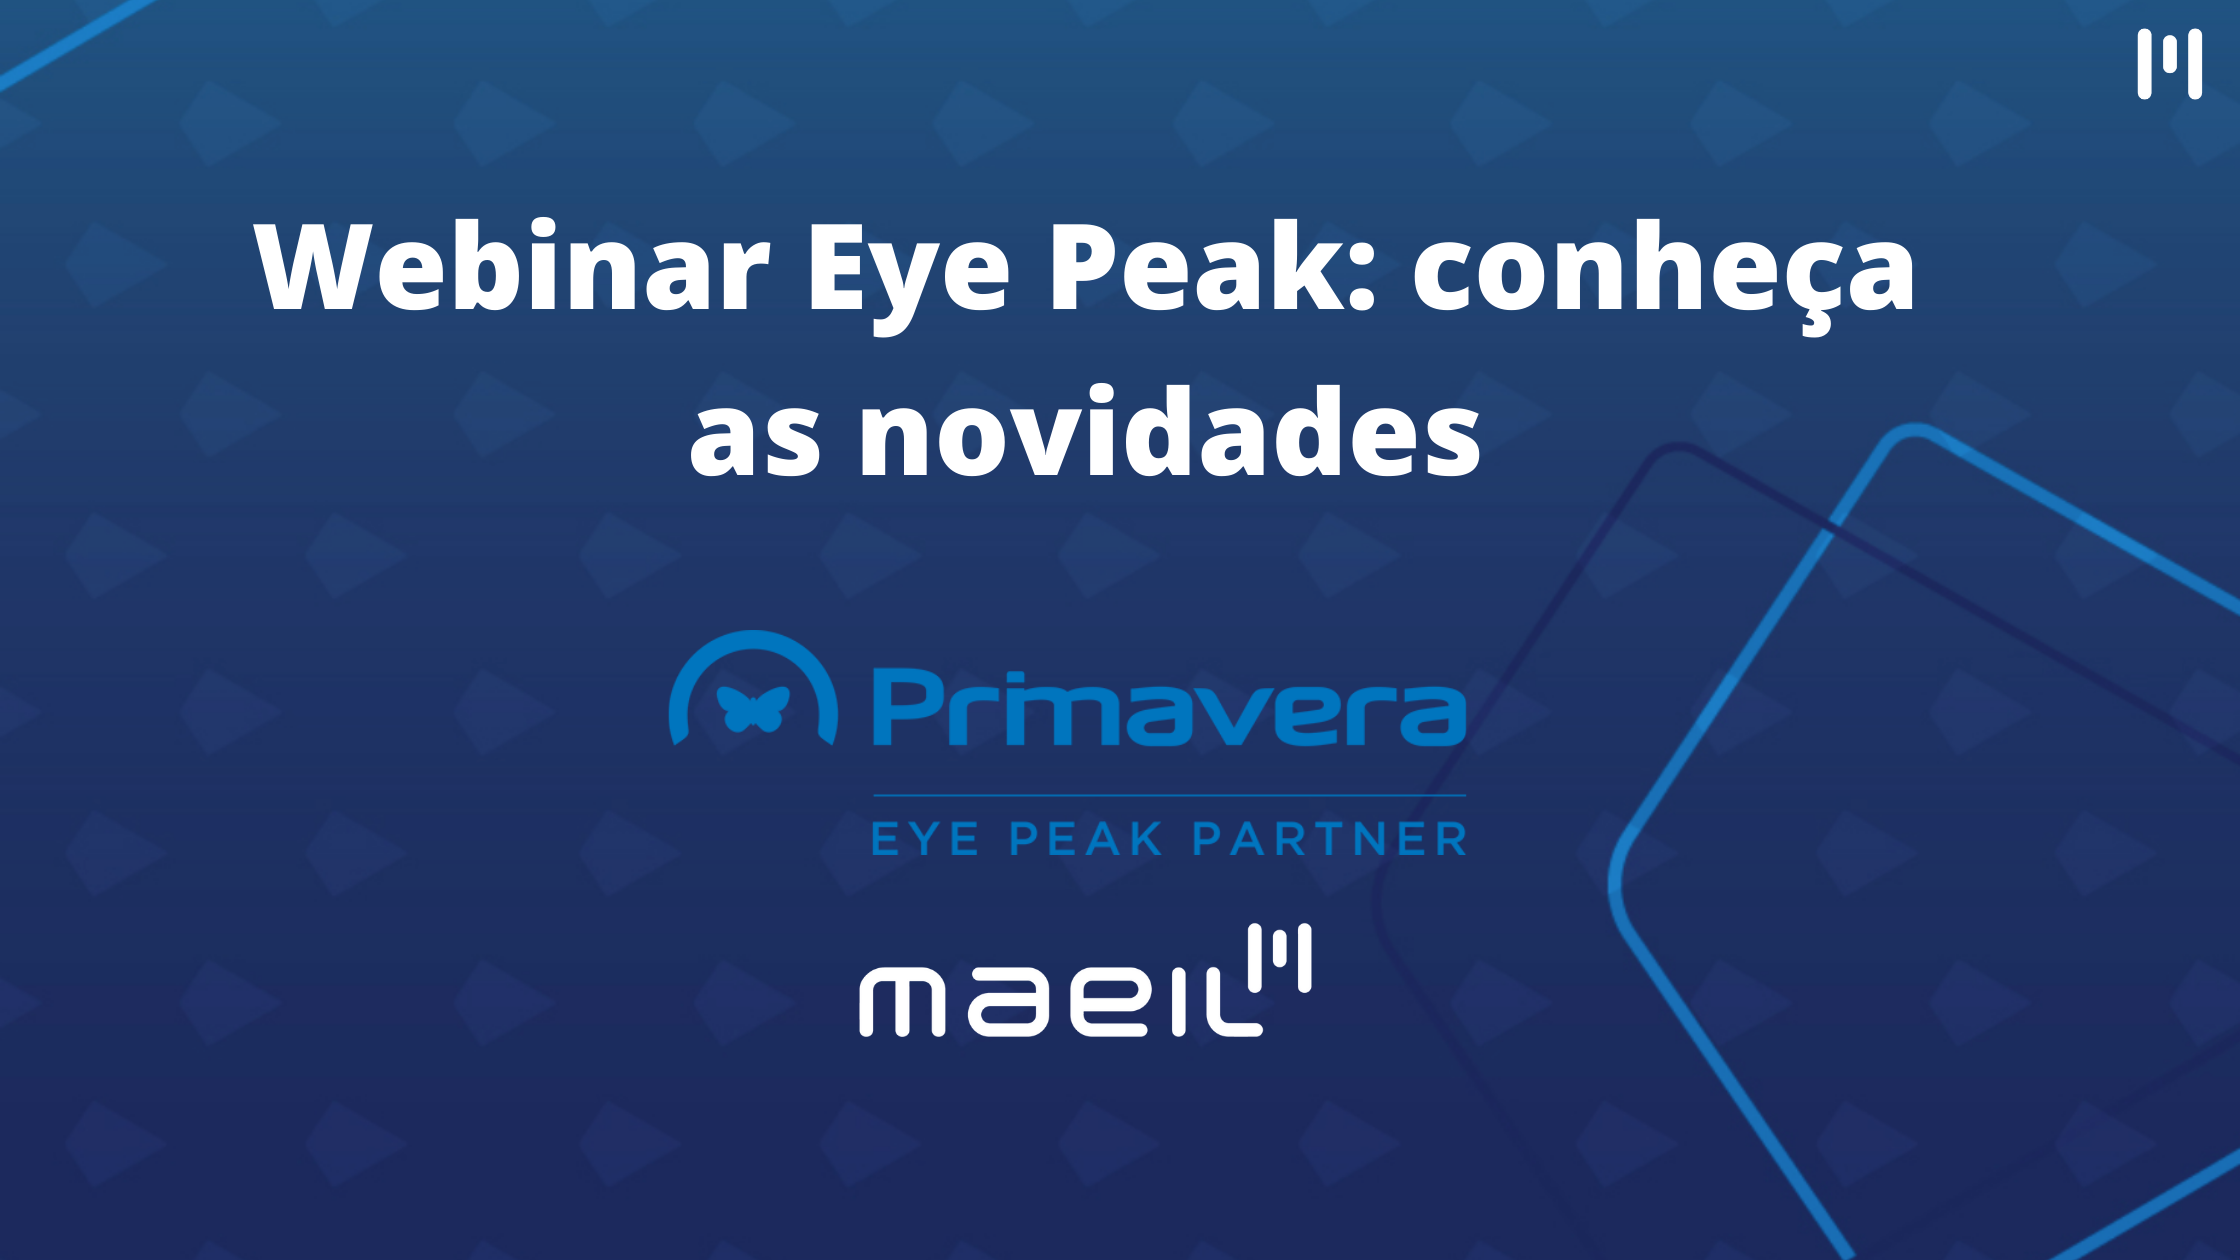 You are currently viewing Webinar Eye Peak: conheça as novidades